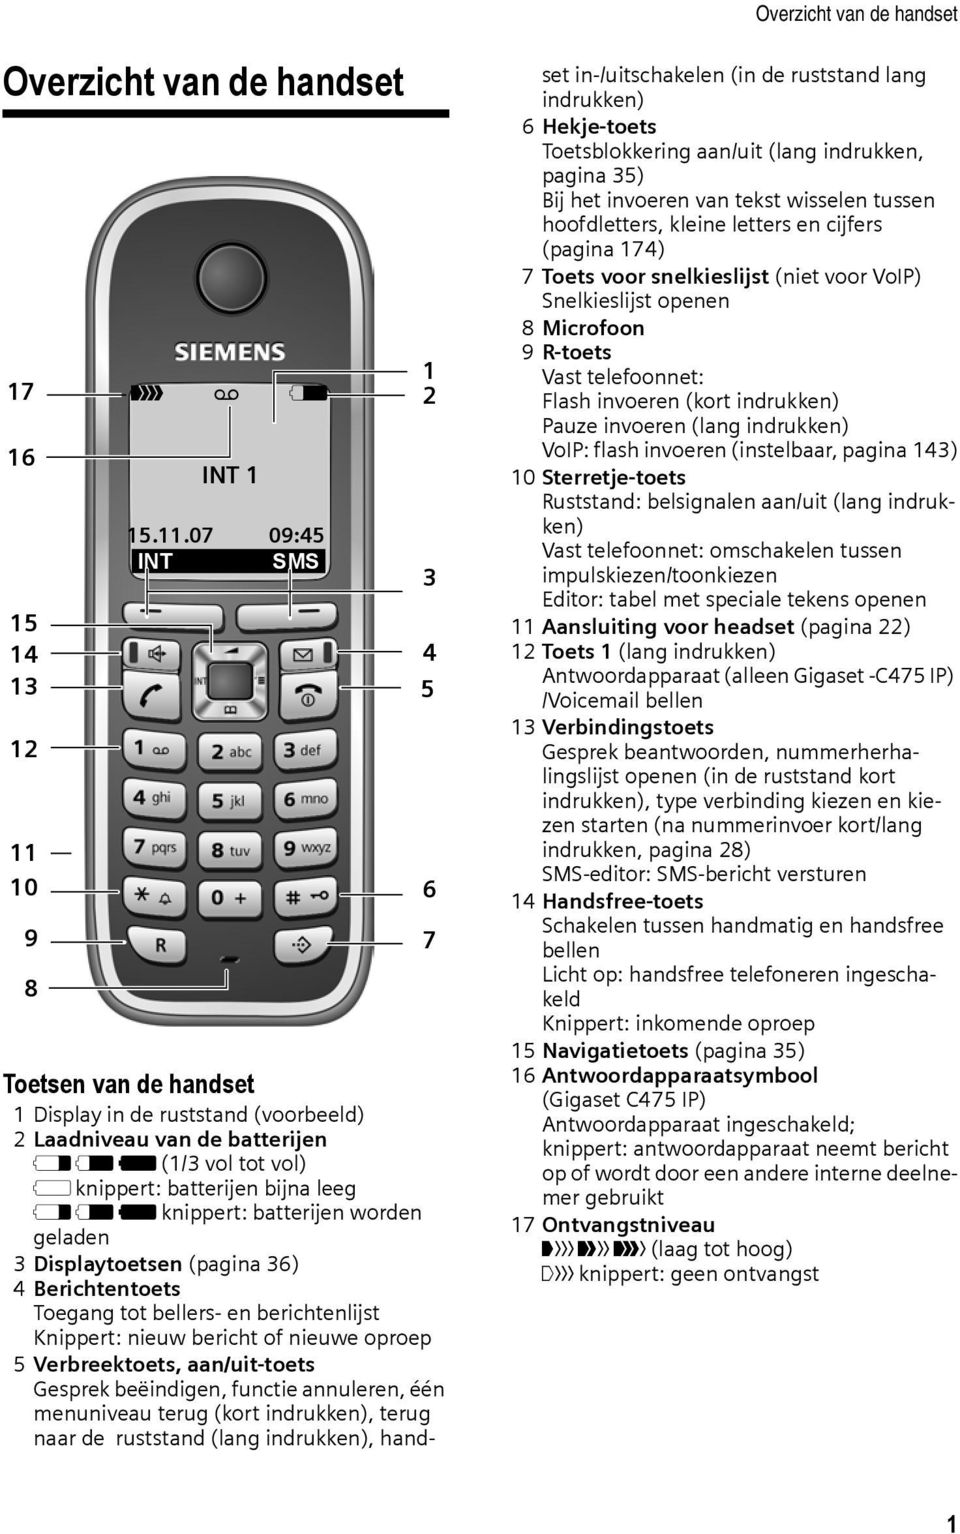 07 09:45 INT SMS 1 2 3 4 5 6 7 Toetsen van de handset 1 Display in de ruststand (voorbeeld) 2 Laadniveau van de batterijen e V U (1/3 vol tot vol) = knippert: batterijen bijna leeg e V U knippert: